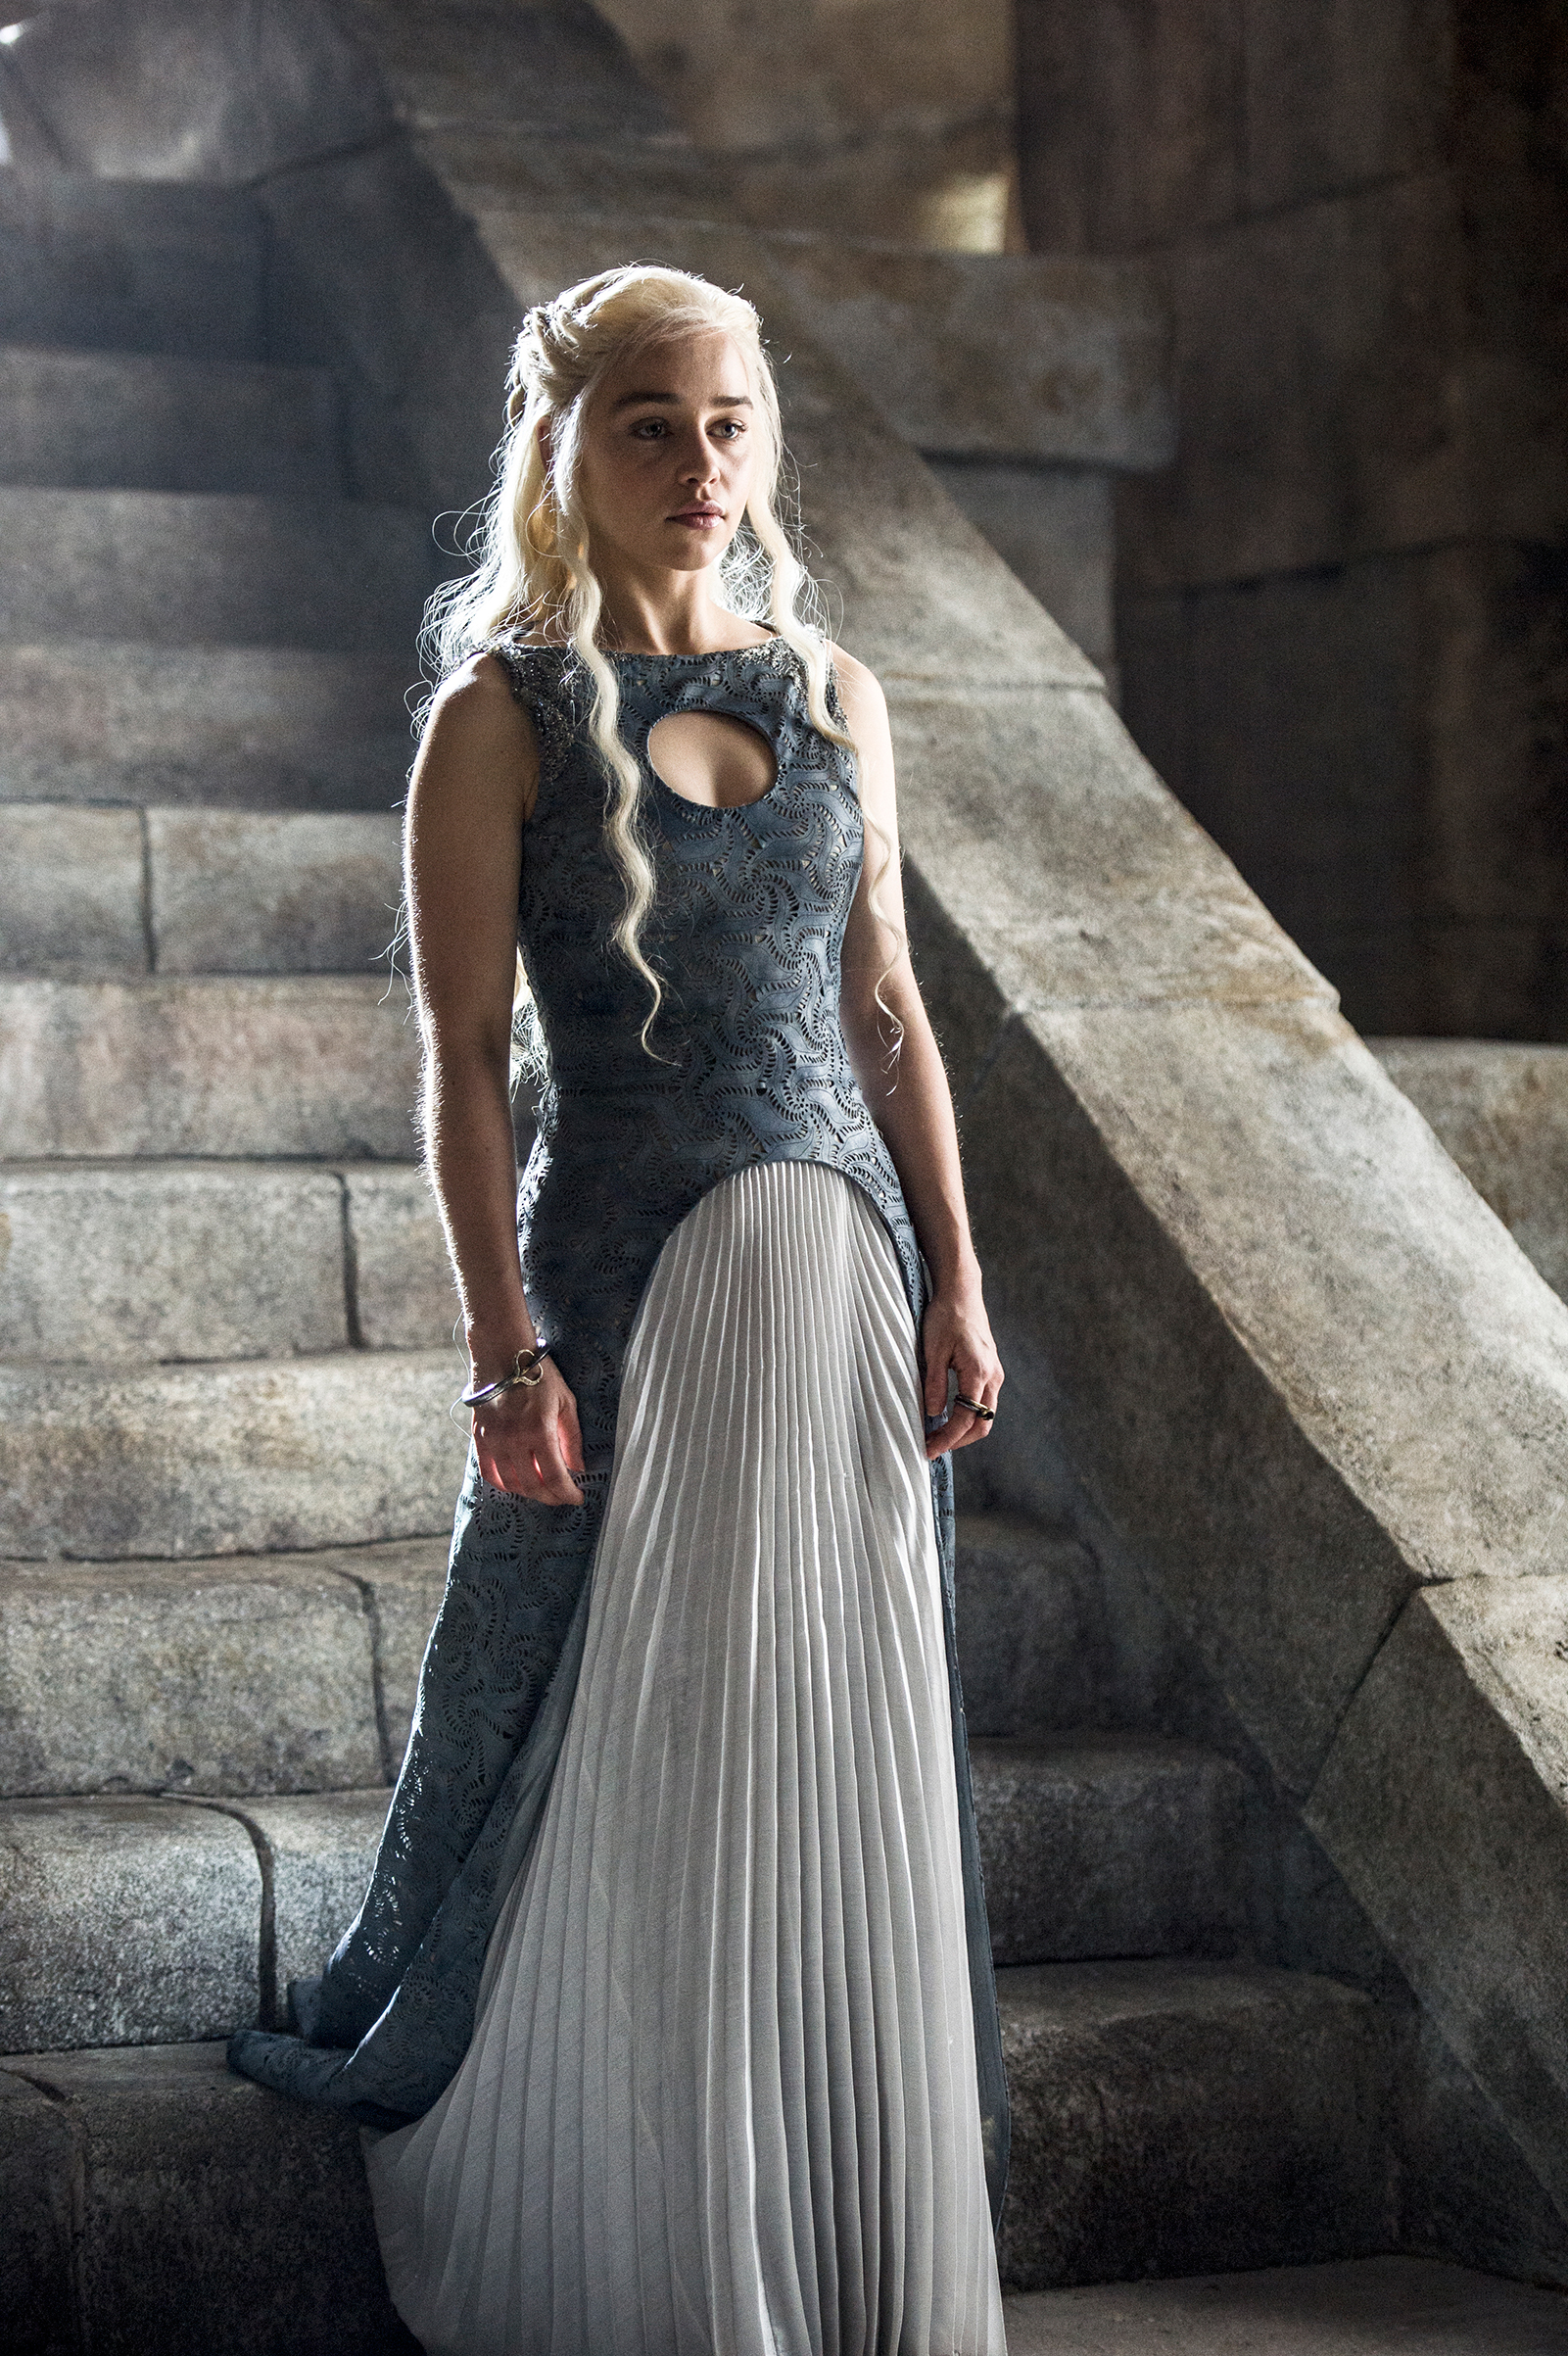 Daenerys Tagaryen in Season 4 of Game of Thrones